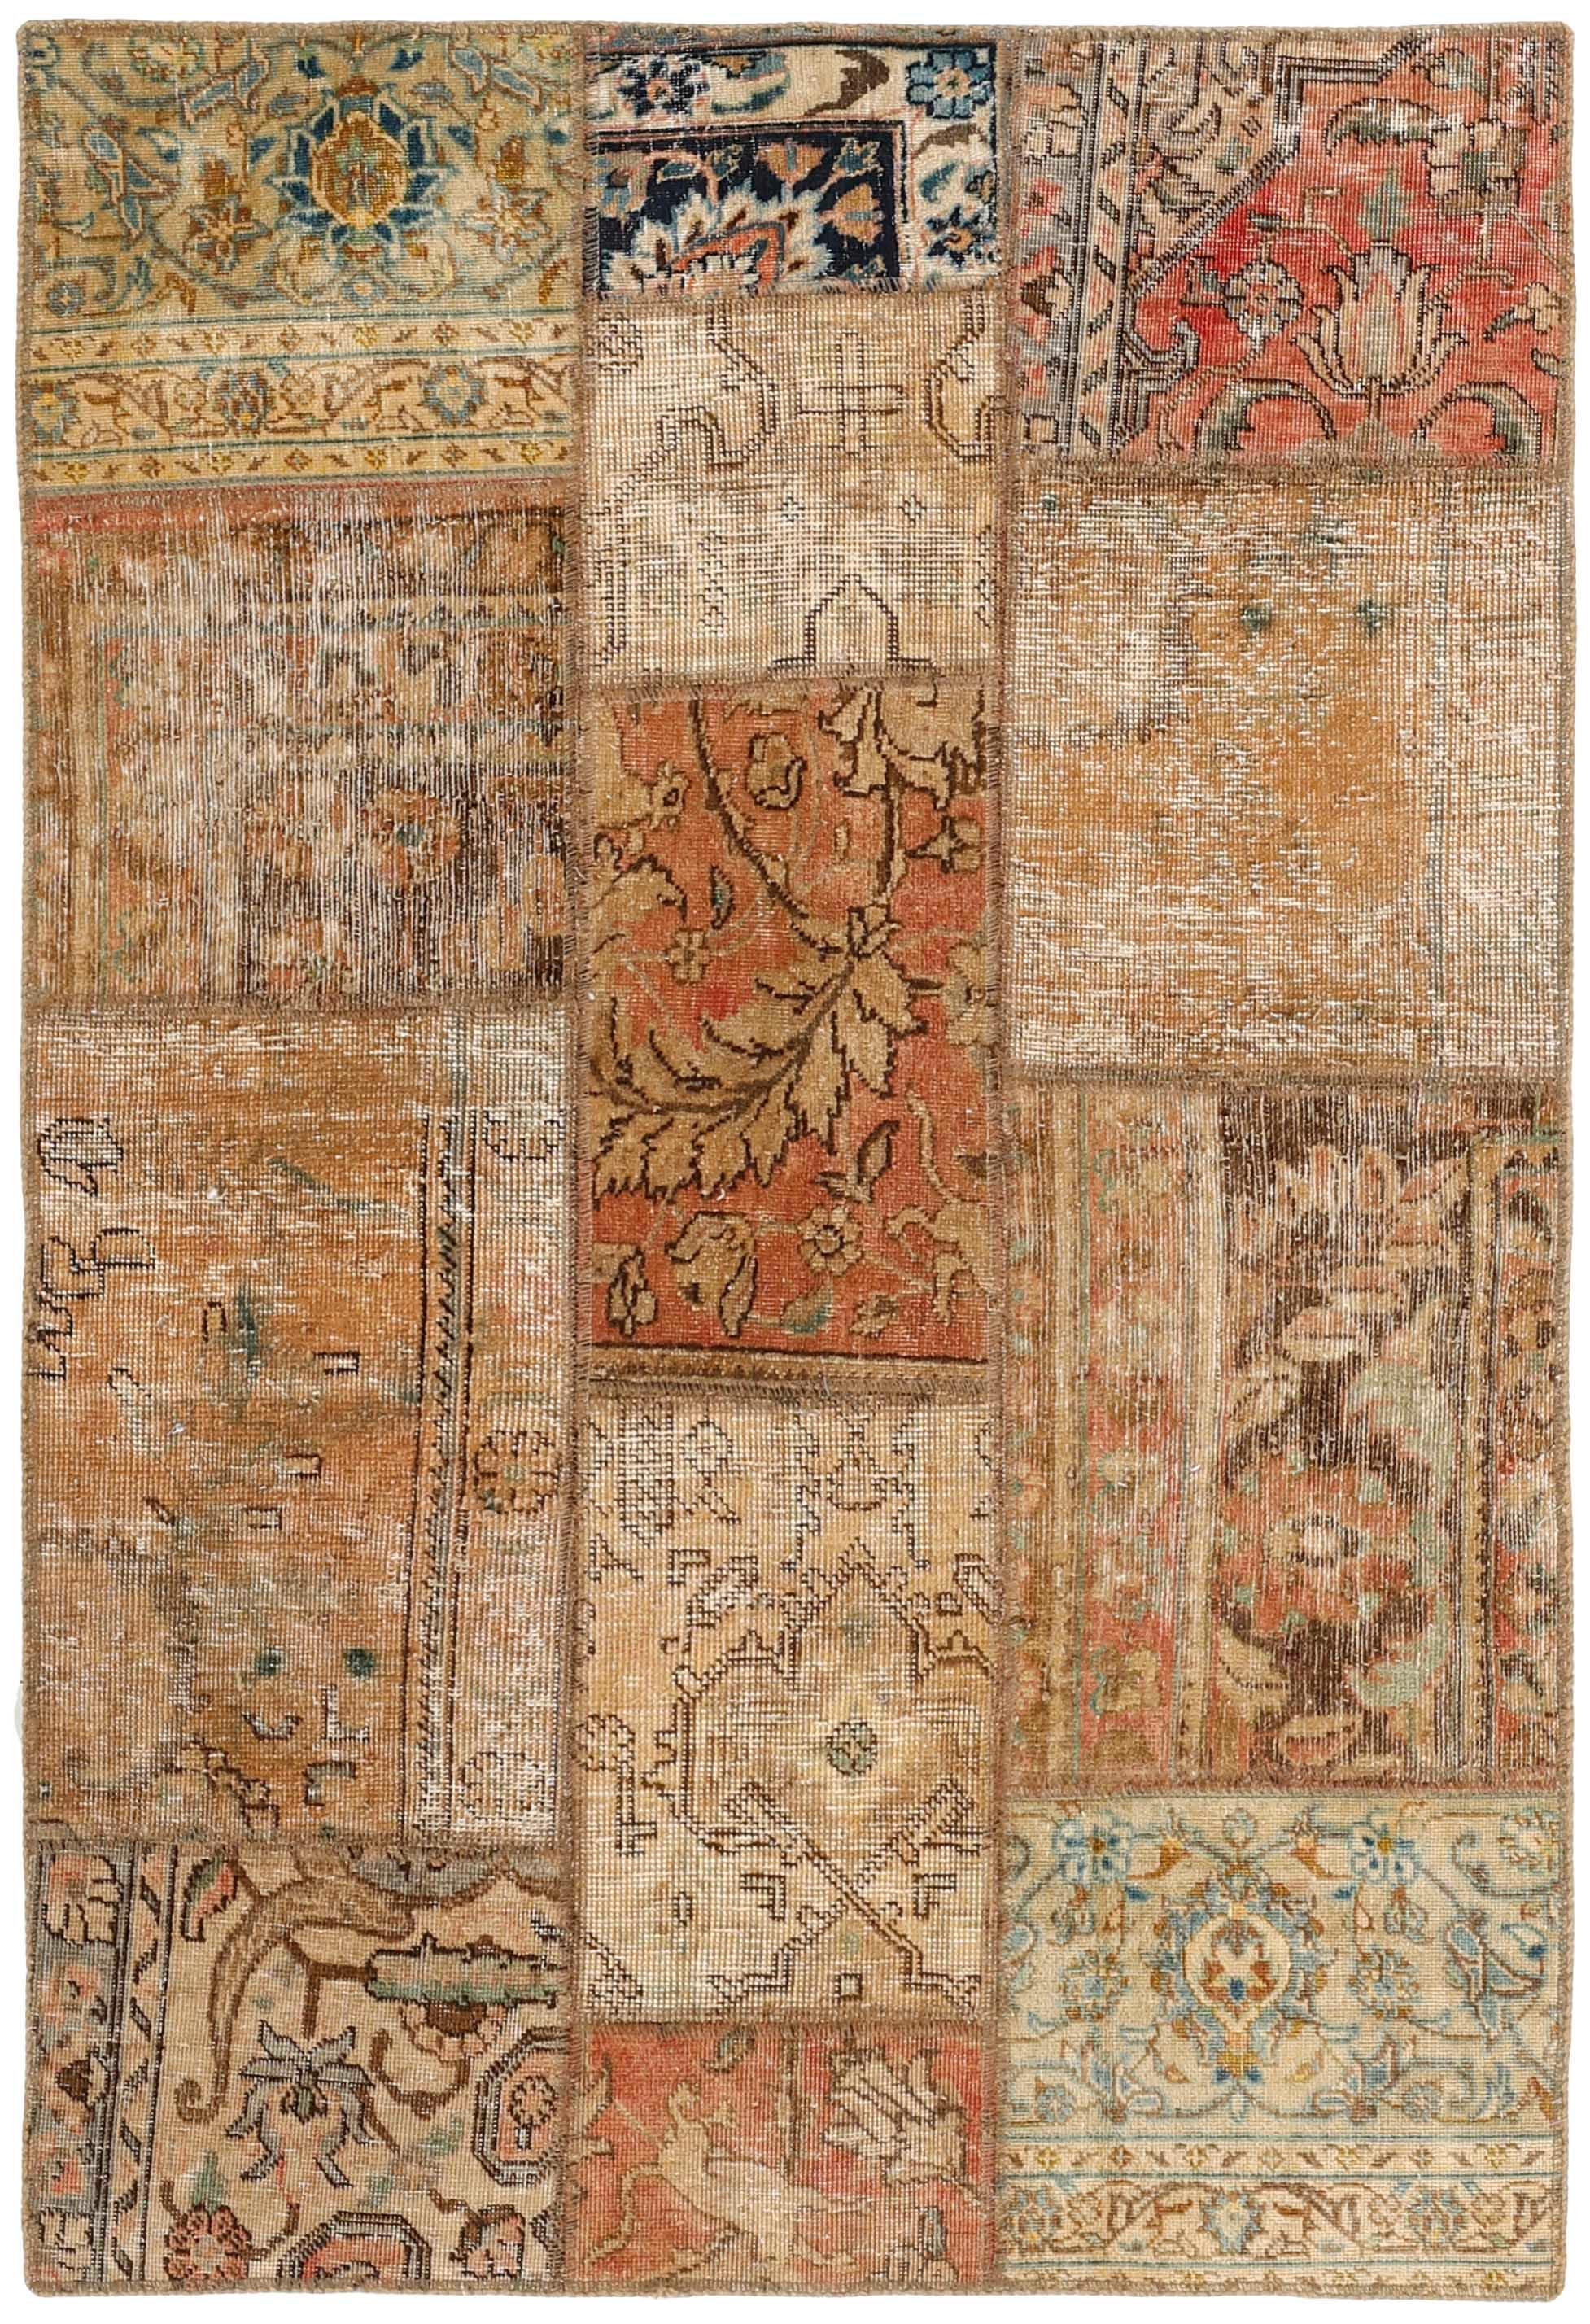 Authentic beige patchwork persian rug